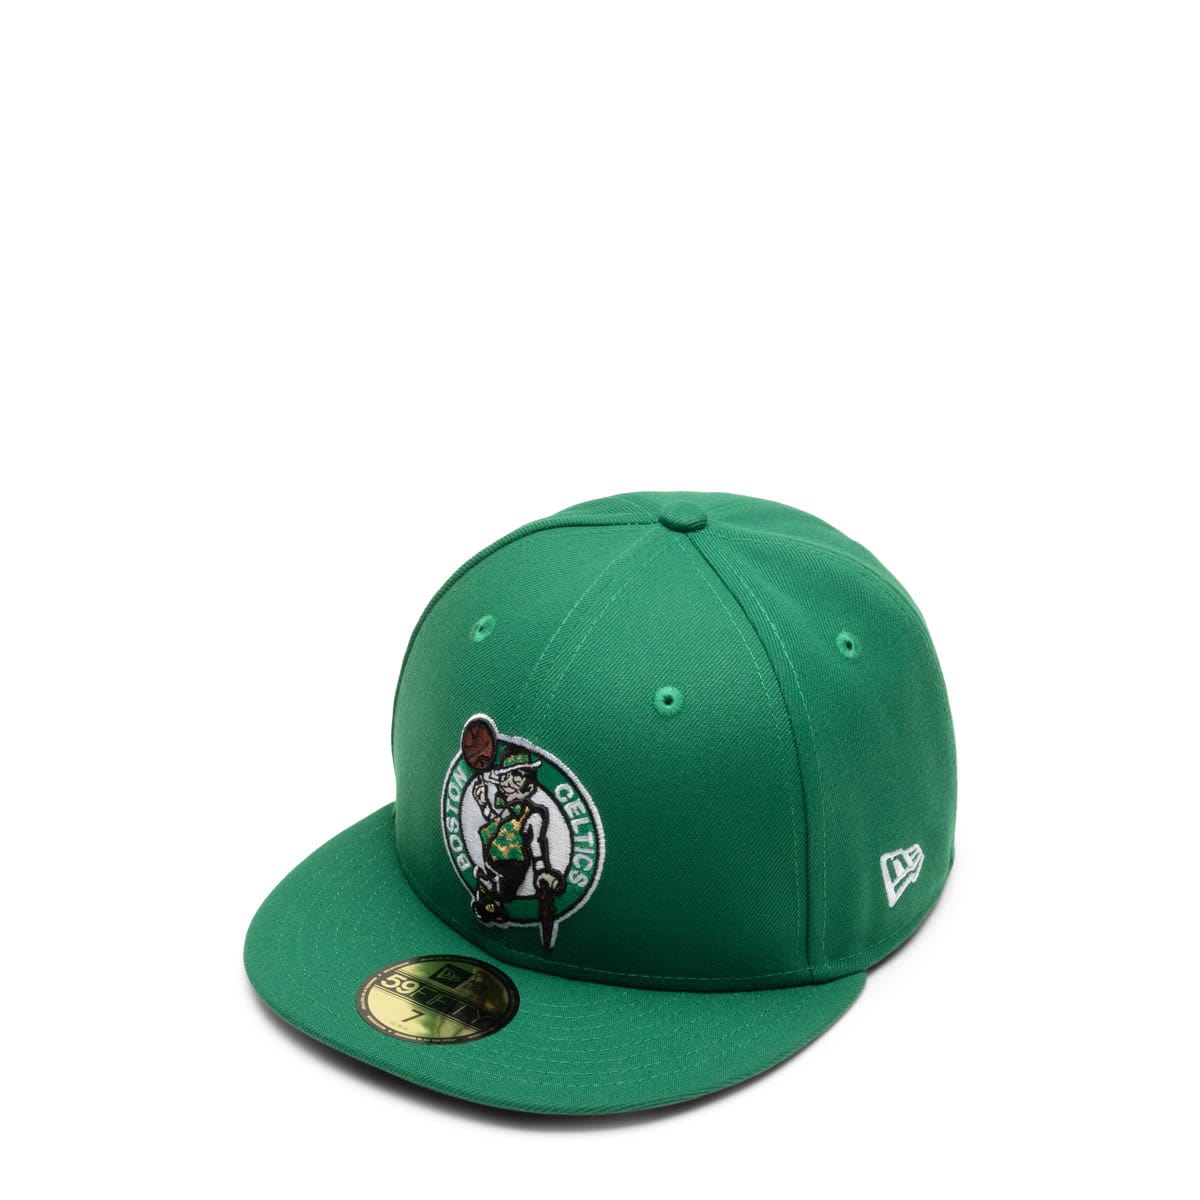 Boston Celtics new era NBA fitted 7 1/4